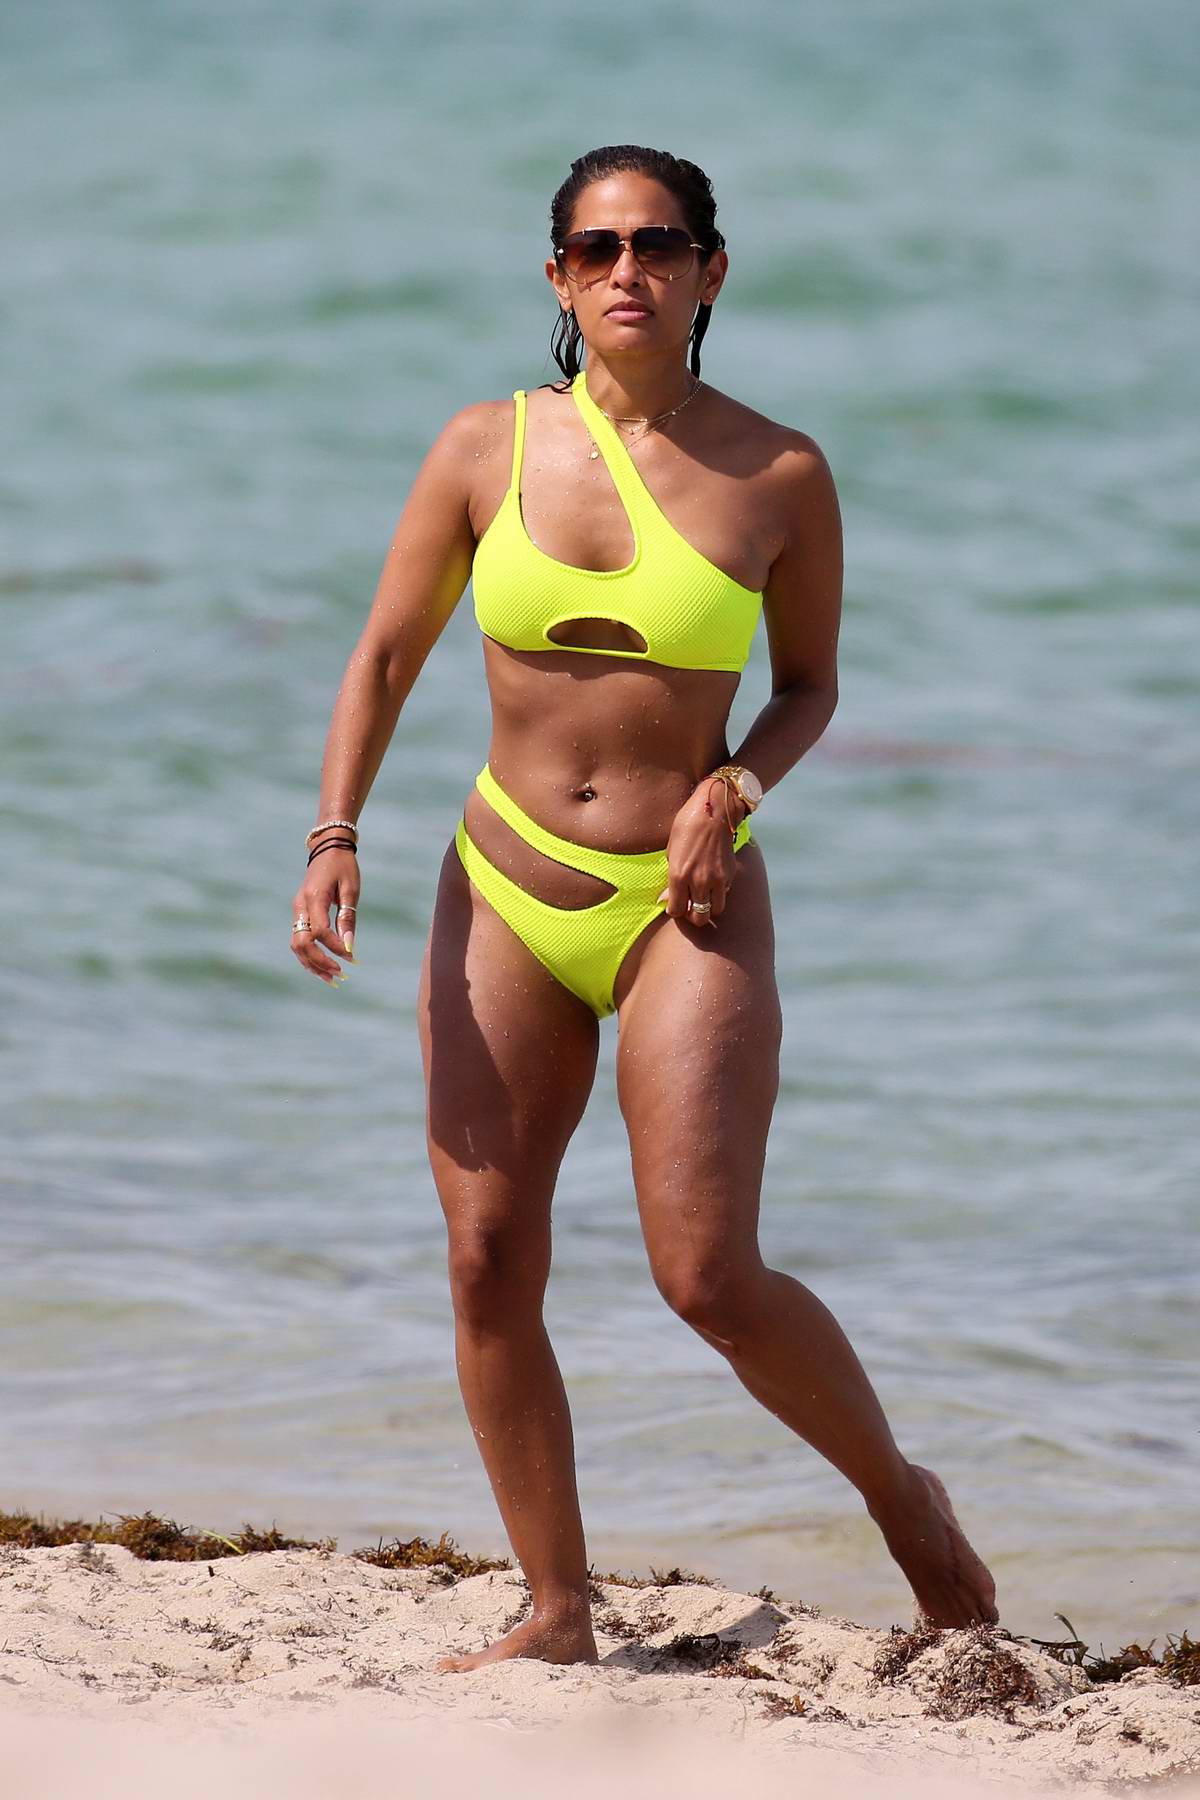 rocsi-diaz-stuns-in-a-neon-green-bikini-as-she-enjoys-a-day-at-the-beach-in-miami-florida-110619_13.jpg